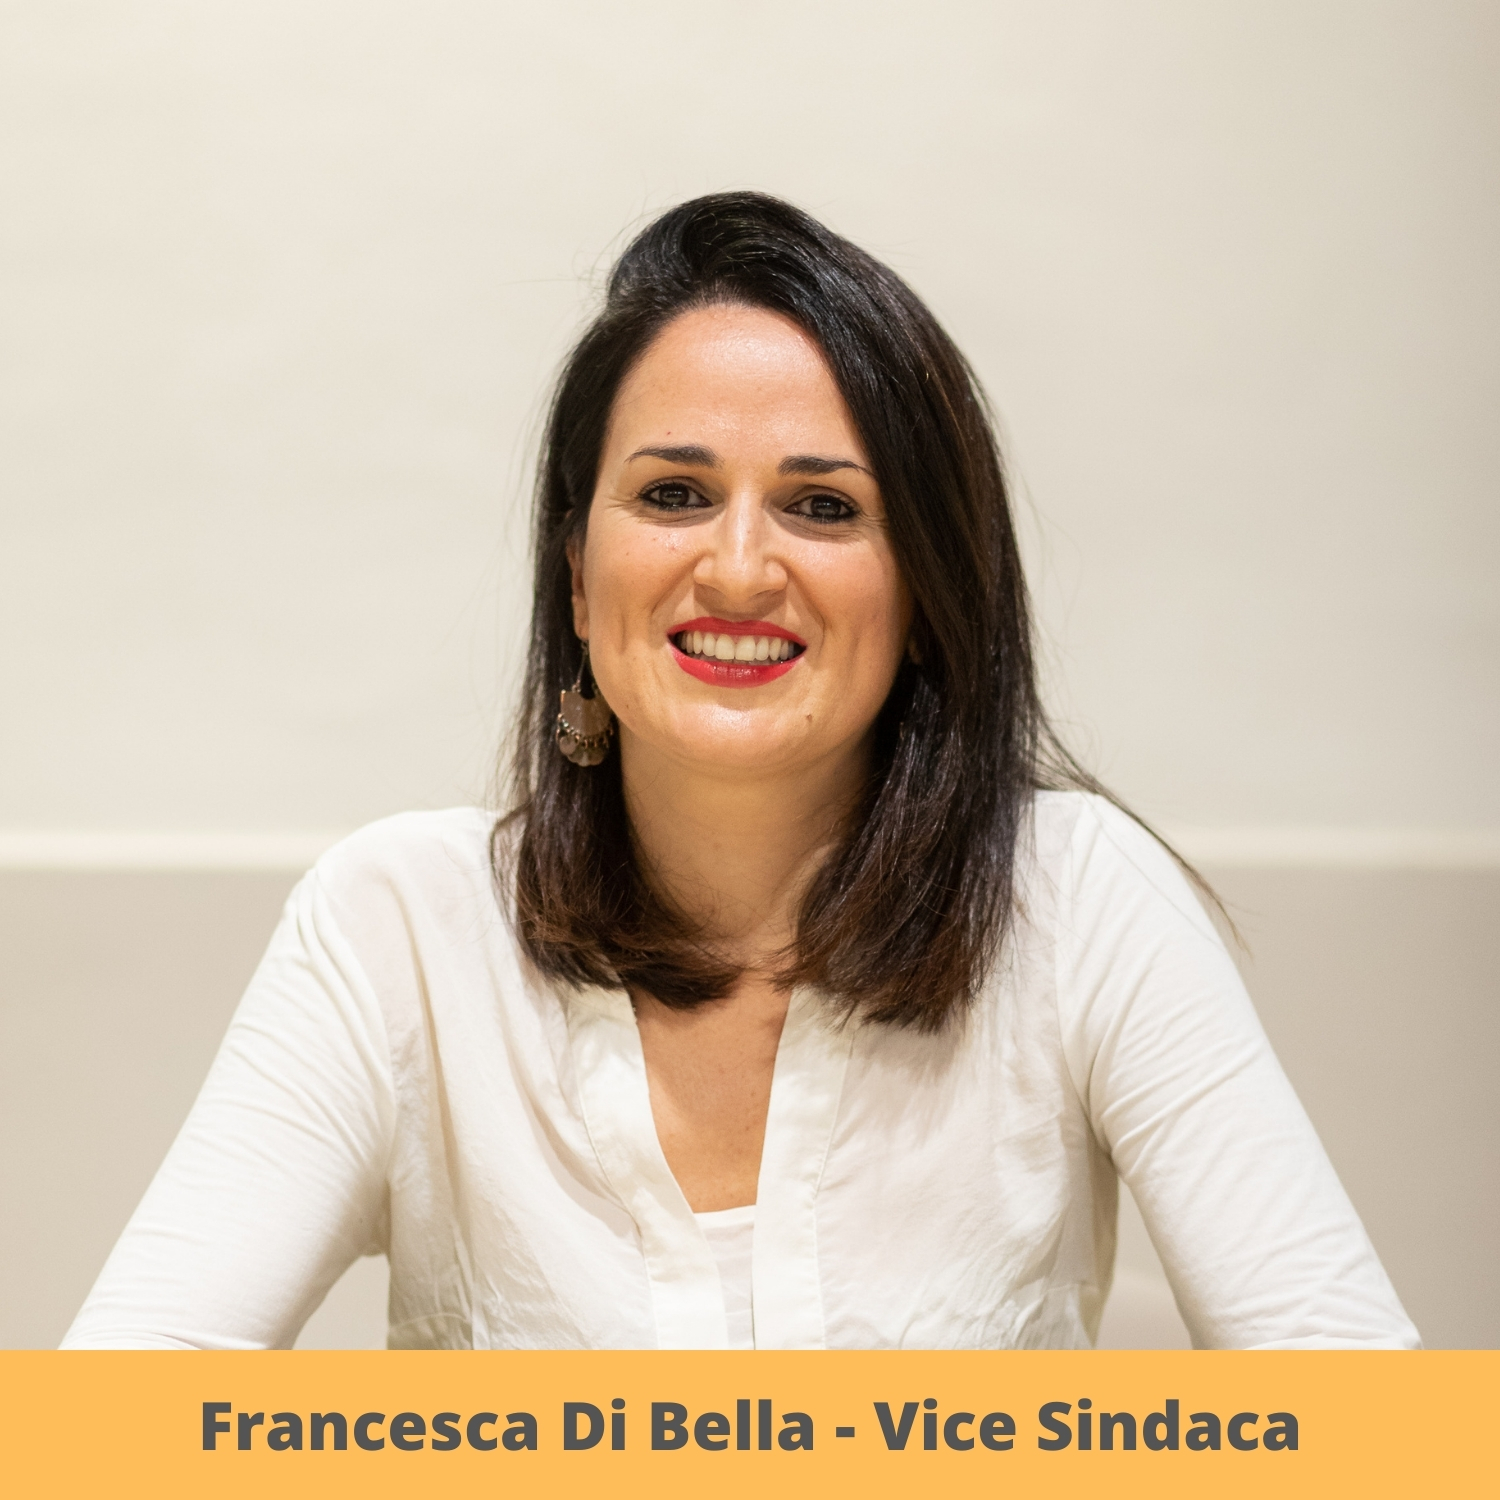 Francesca DI BELLA (Vice Sindaca)